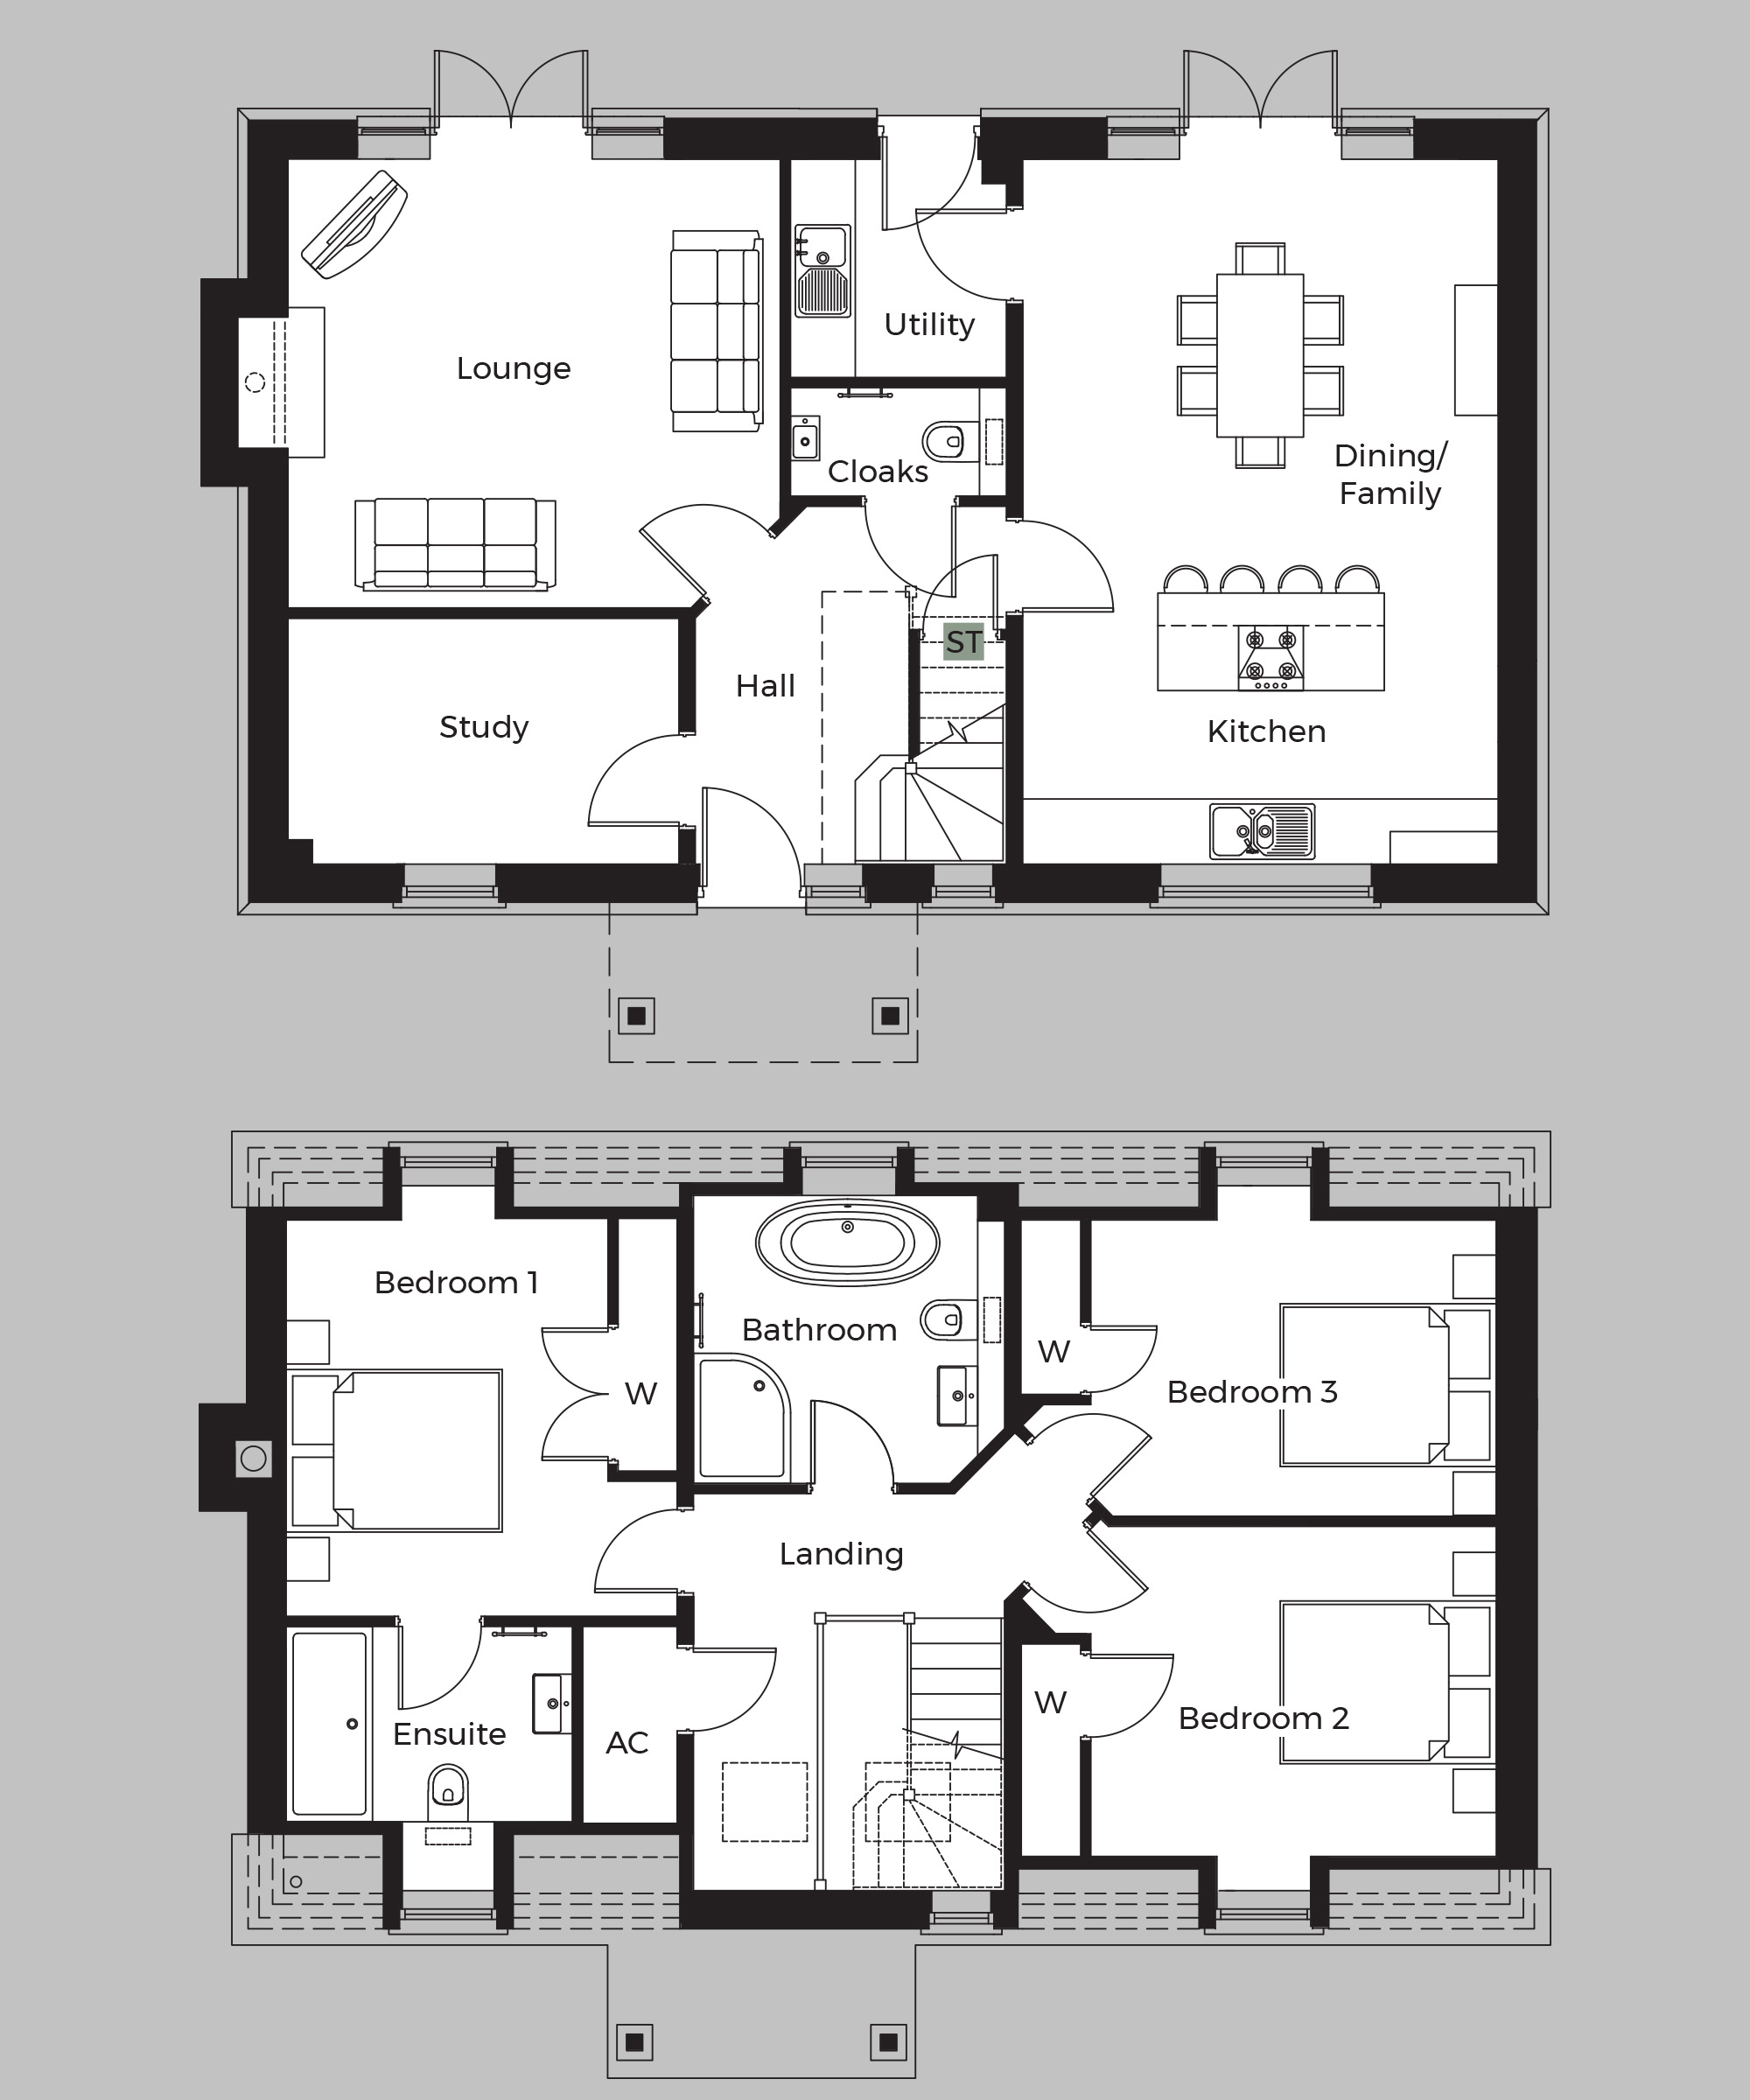 Crossbill Lodge Plan - New houses in Buckinghamshire